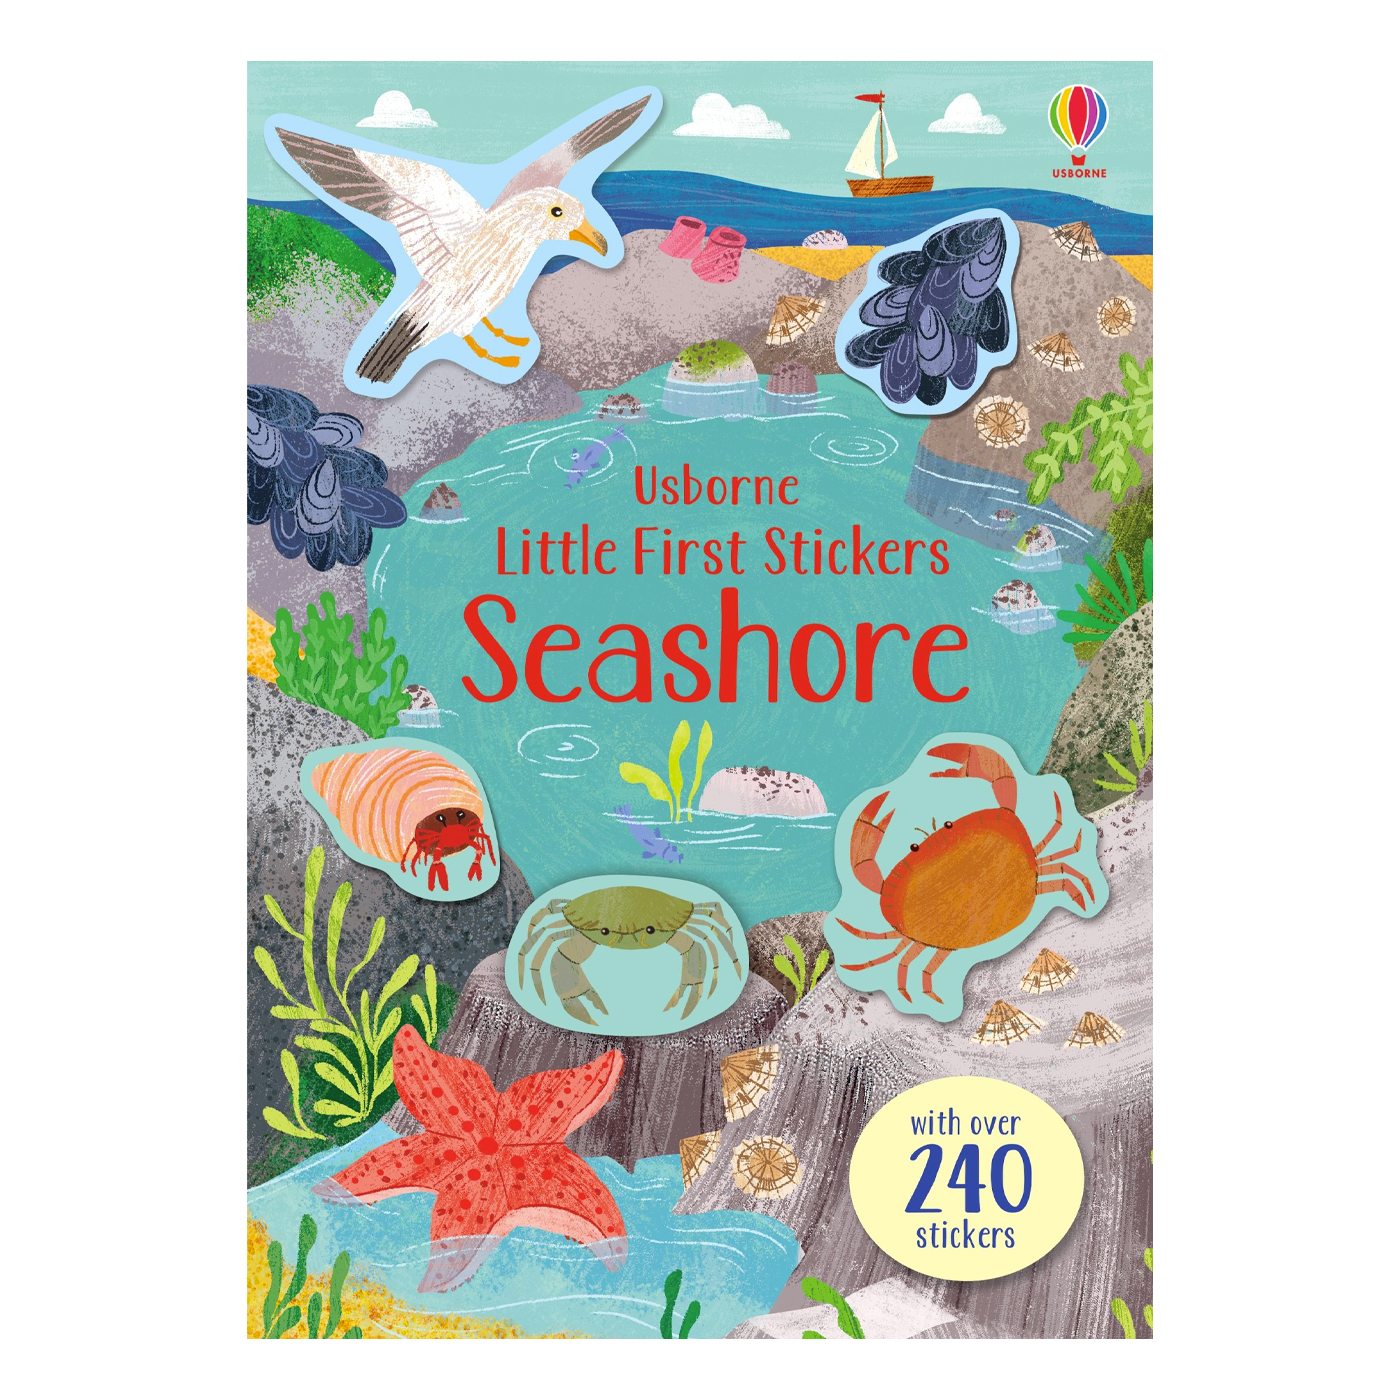  Little First Stickers: Seashore